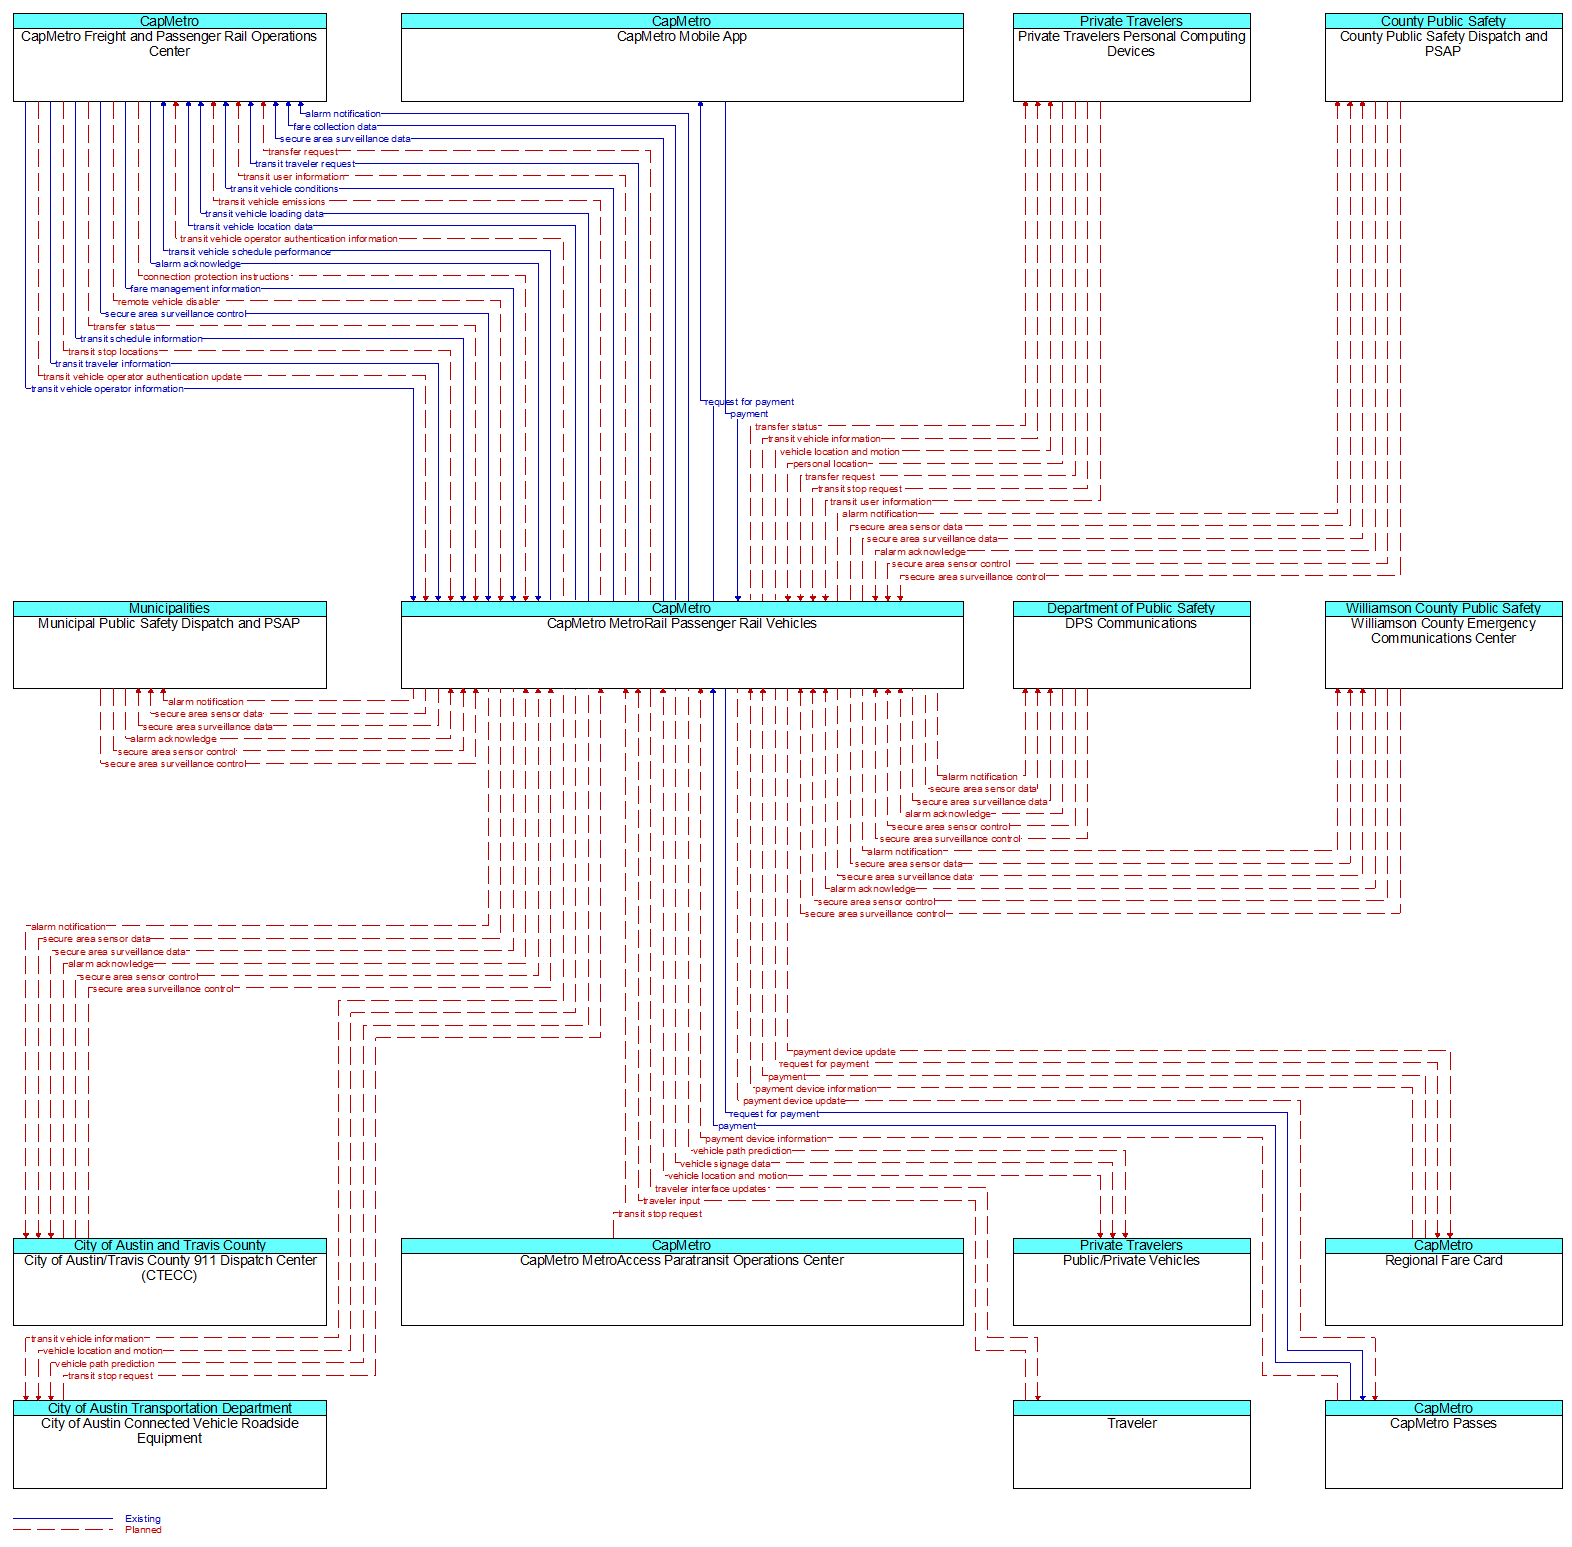 Context Diagram - CapMetro MetroRail Passenger Rail Vehicles